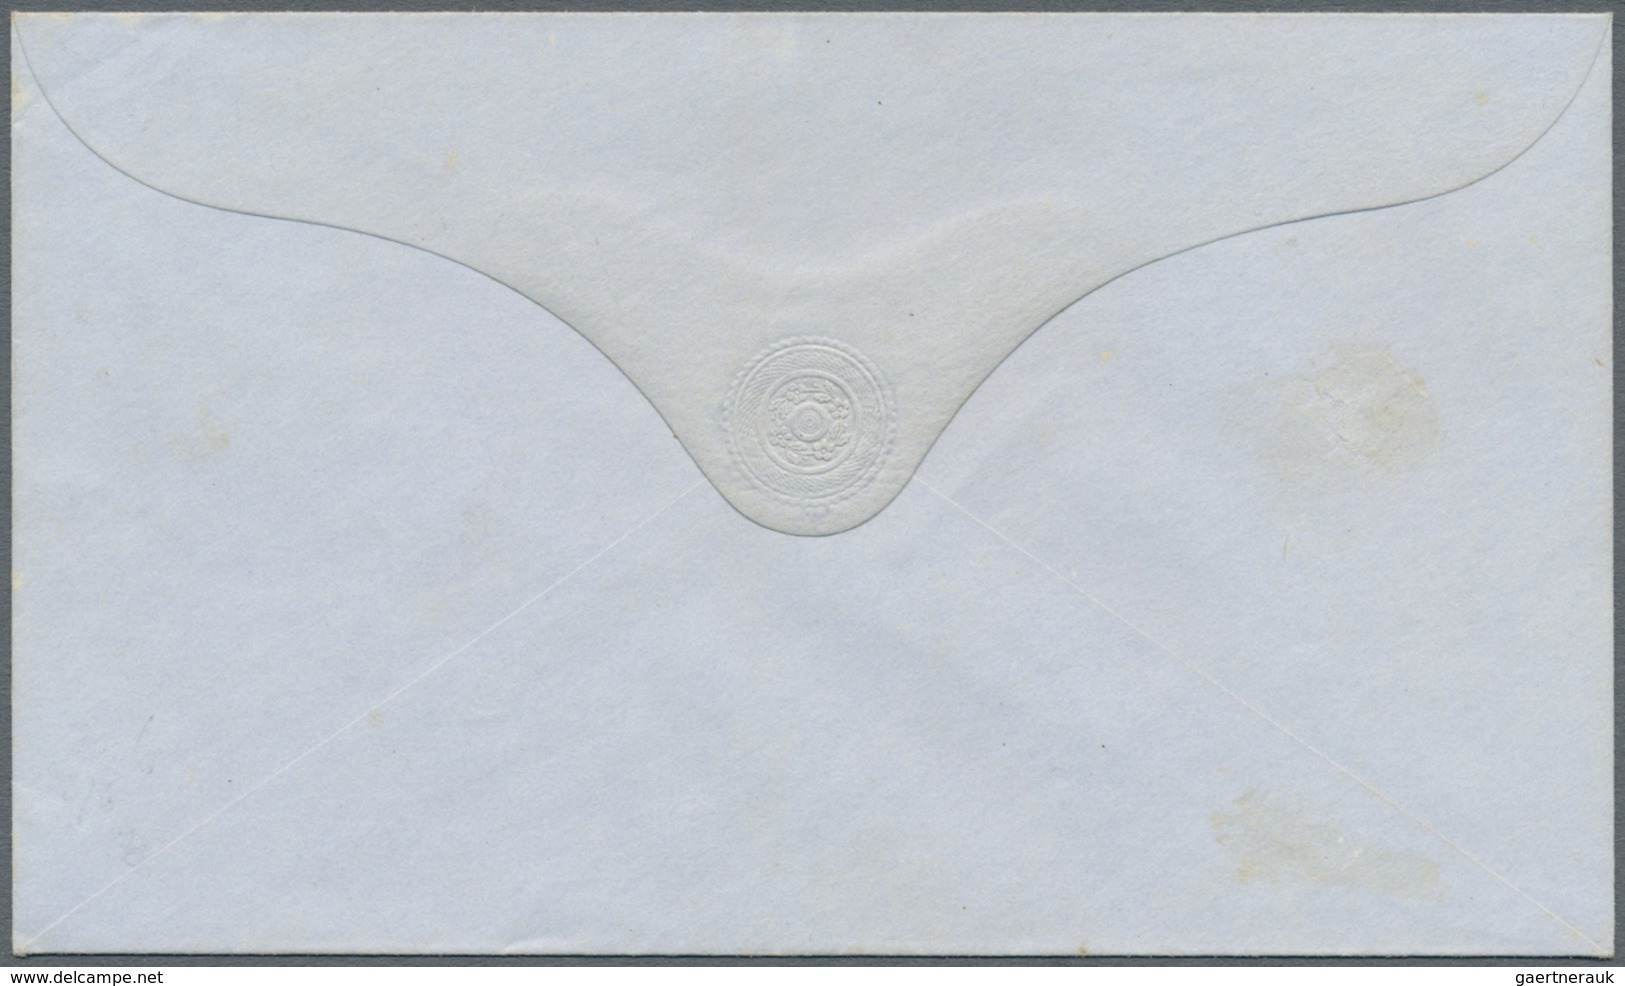 GA Mauritius: 1862, QV stationery envelopes (5): 6d (3, HG1a x2, 3d), 9d (2, HG 2, 2a) plus 6d (HG1) ov